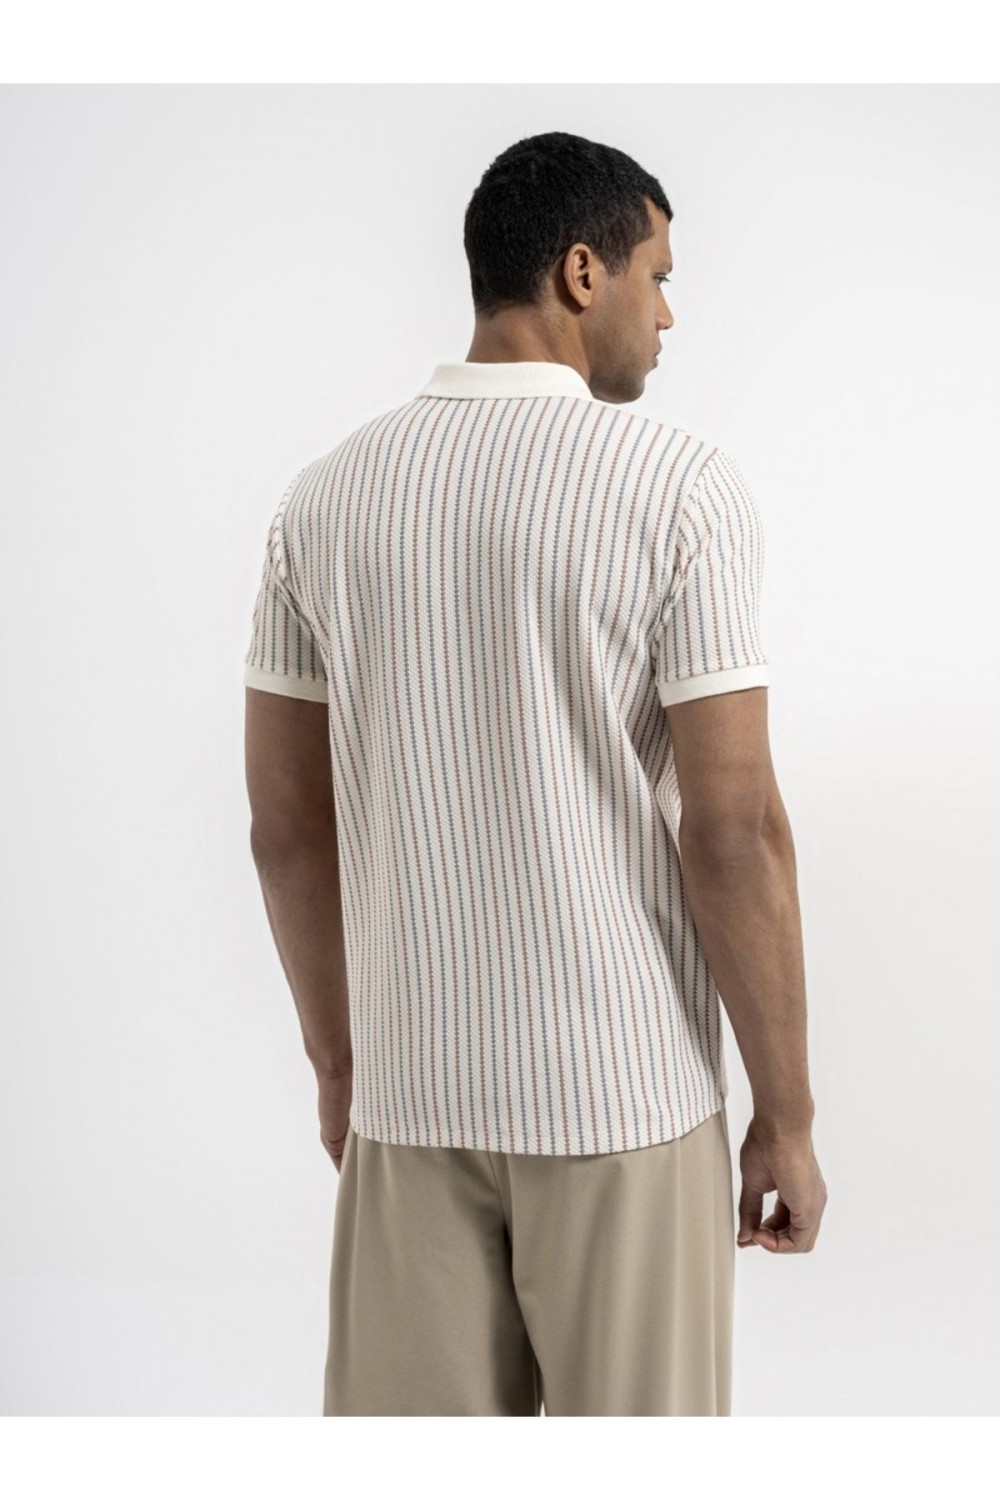 Beige Male Polo Neck T-shirt